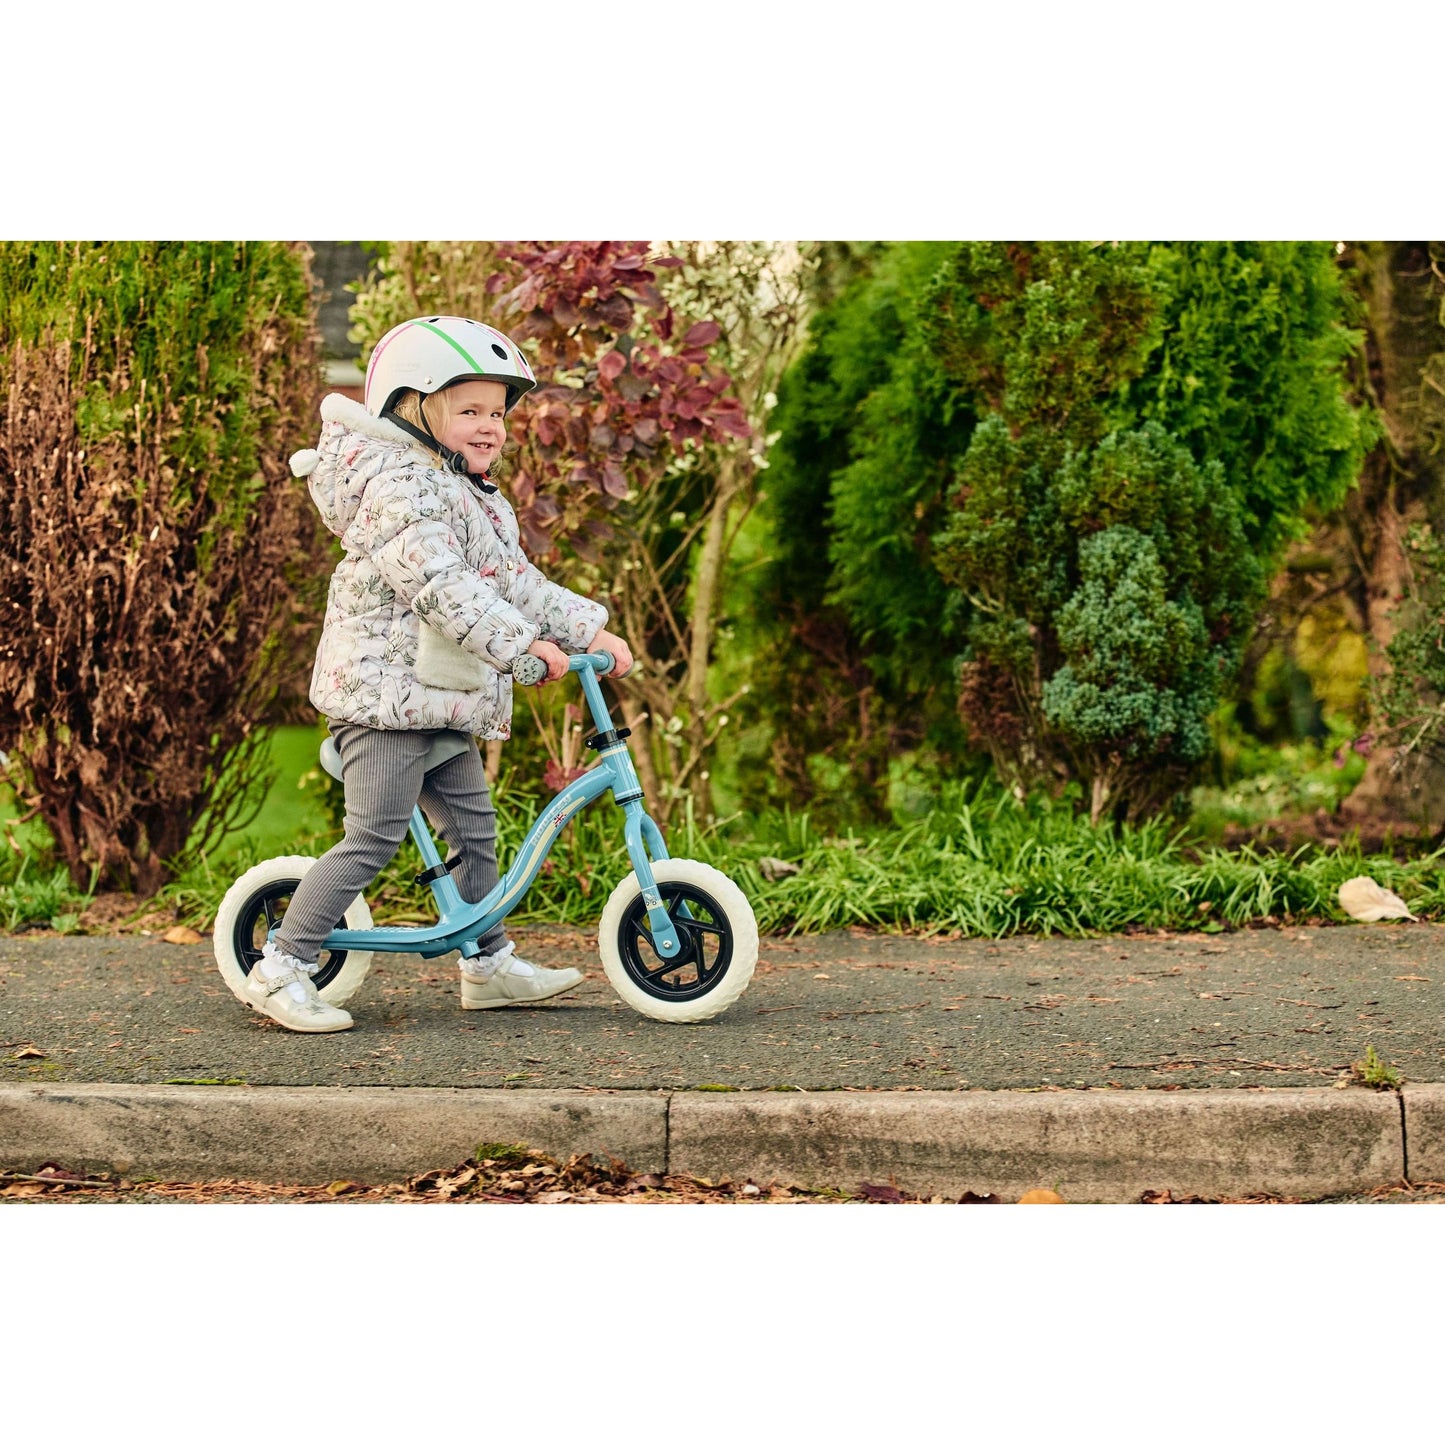 girl wearing Ride-Ezy Hector 54-57cms Kids Helmet - White and riding ride-ezy go glo balance bike